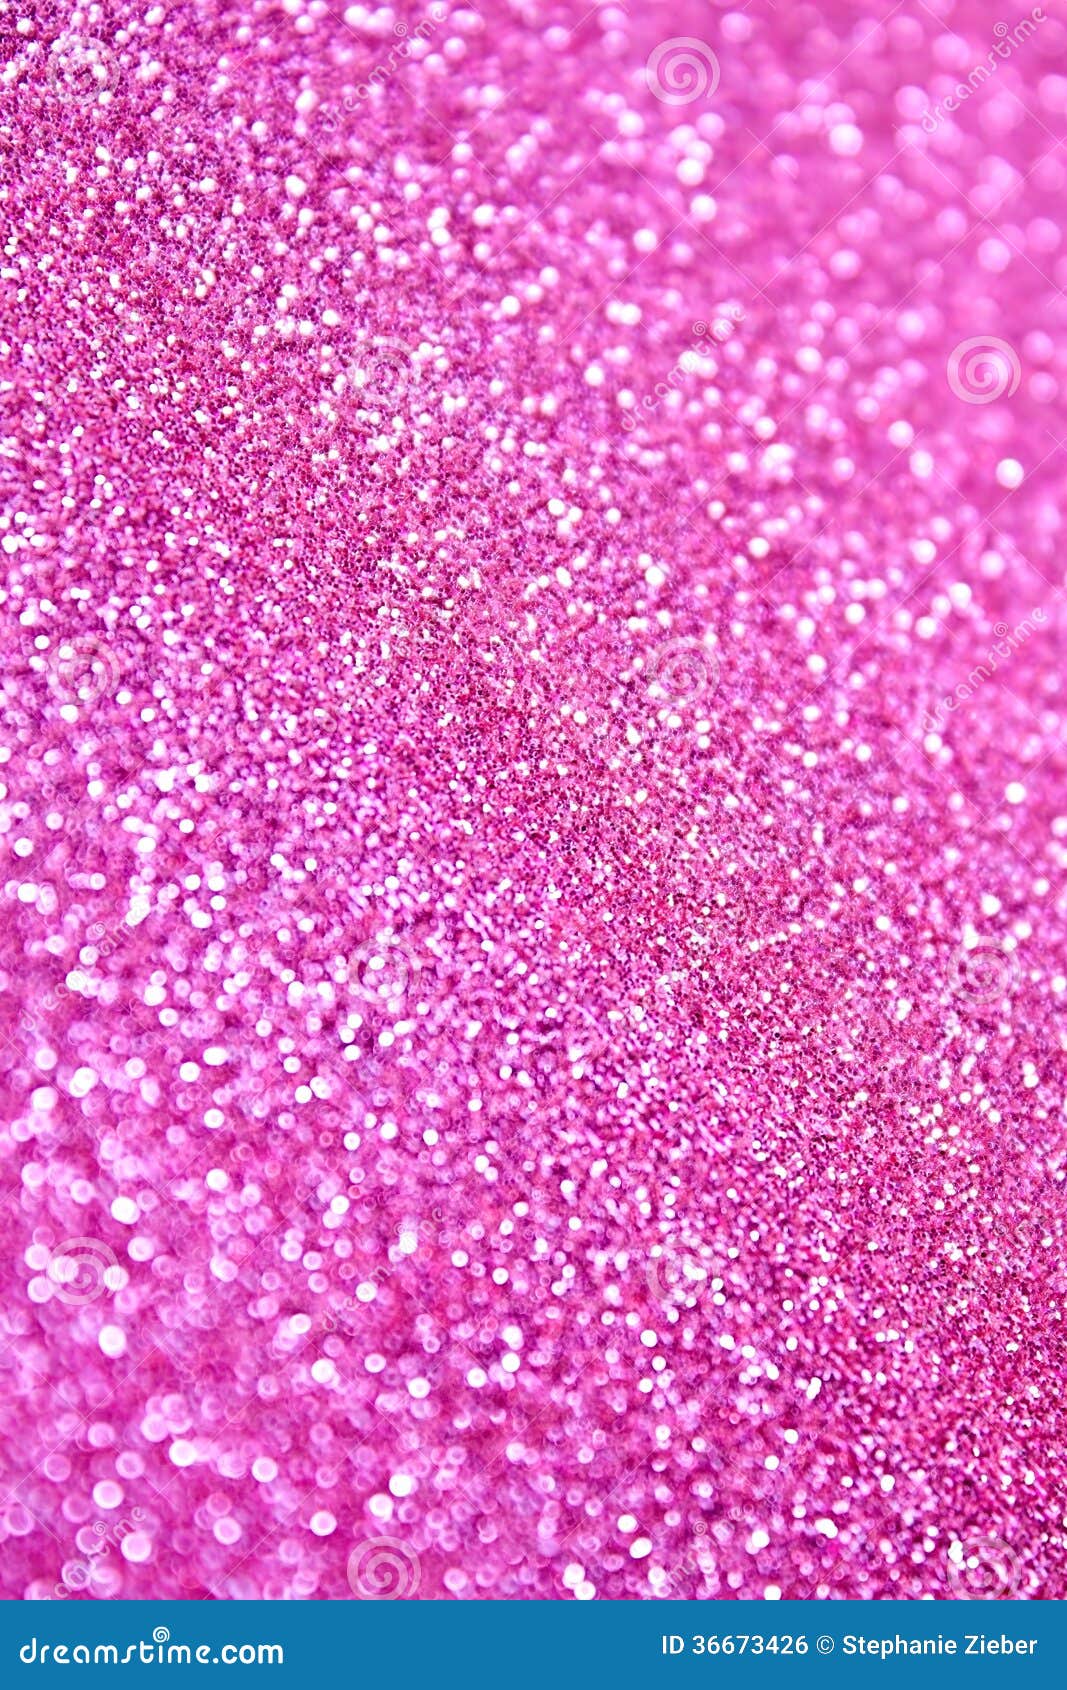 Pink Glitter Background stock photo. Image of lights - 36673426